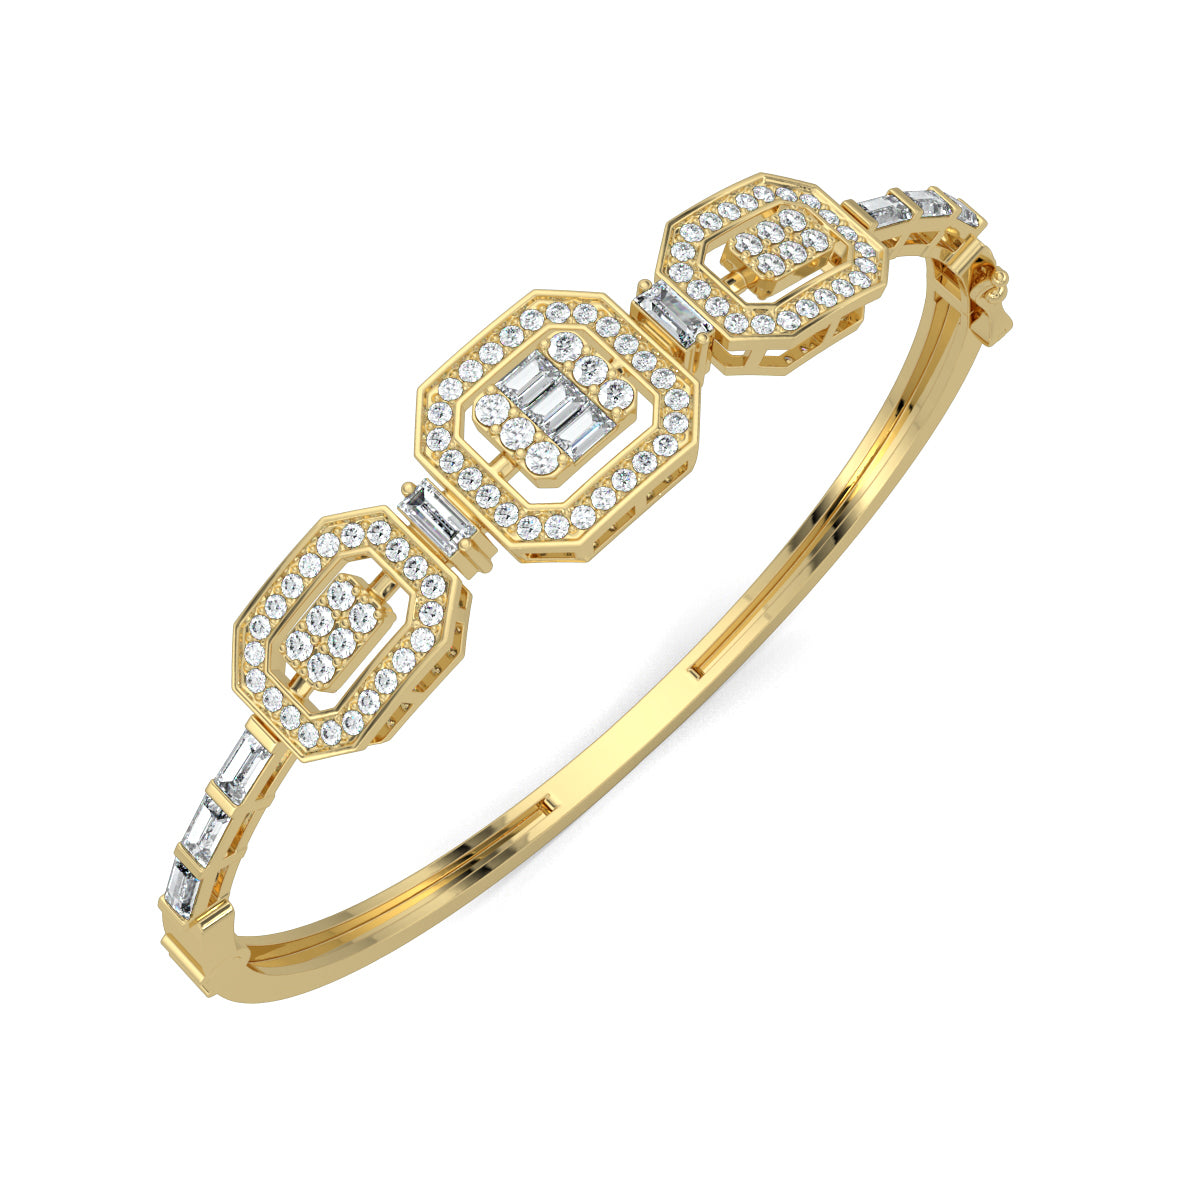 Yellow Gold, Diamond Bracelet, Elysian Emerald Bracelet, Natural Diamonds, Lab-grown Diamonds, Pave Setting, Baguette Diamonds, Metal Accents, Jewelry, Fashion, Accessories